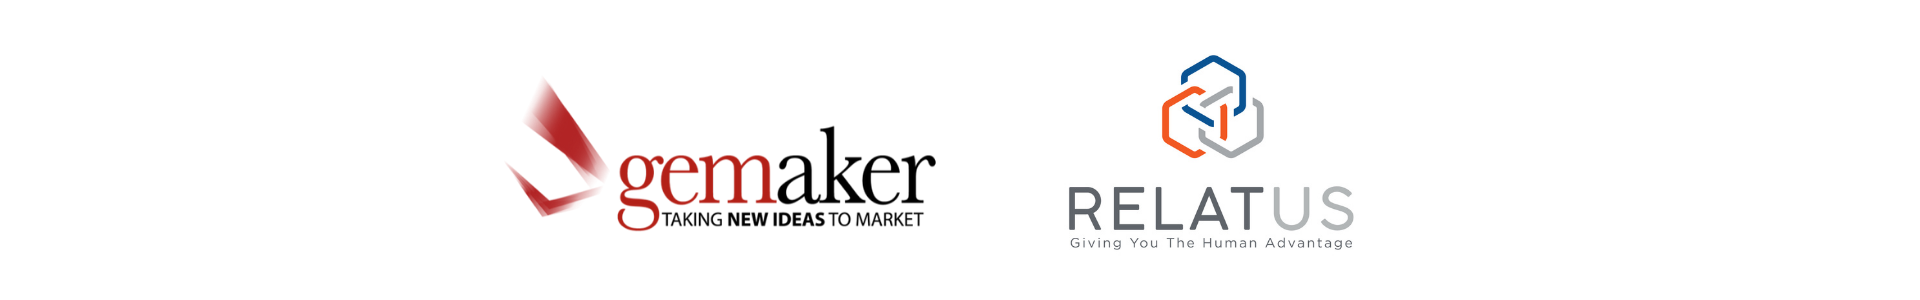 Logos for gemaker and Relatus